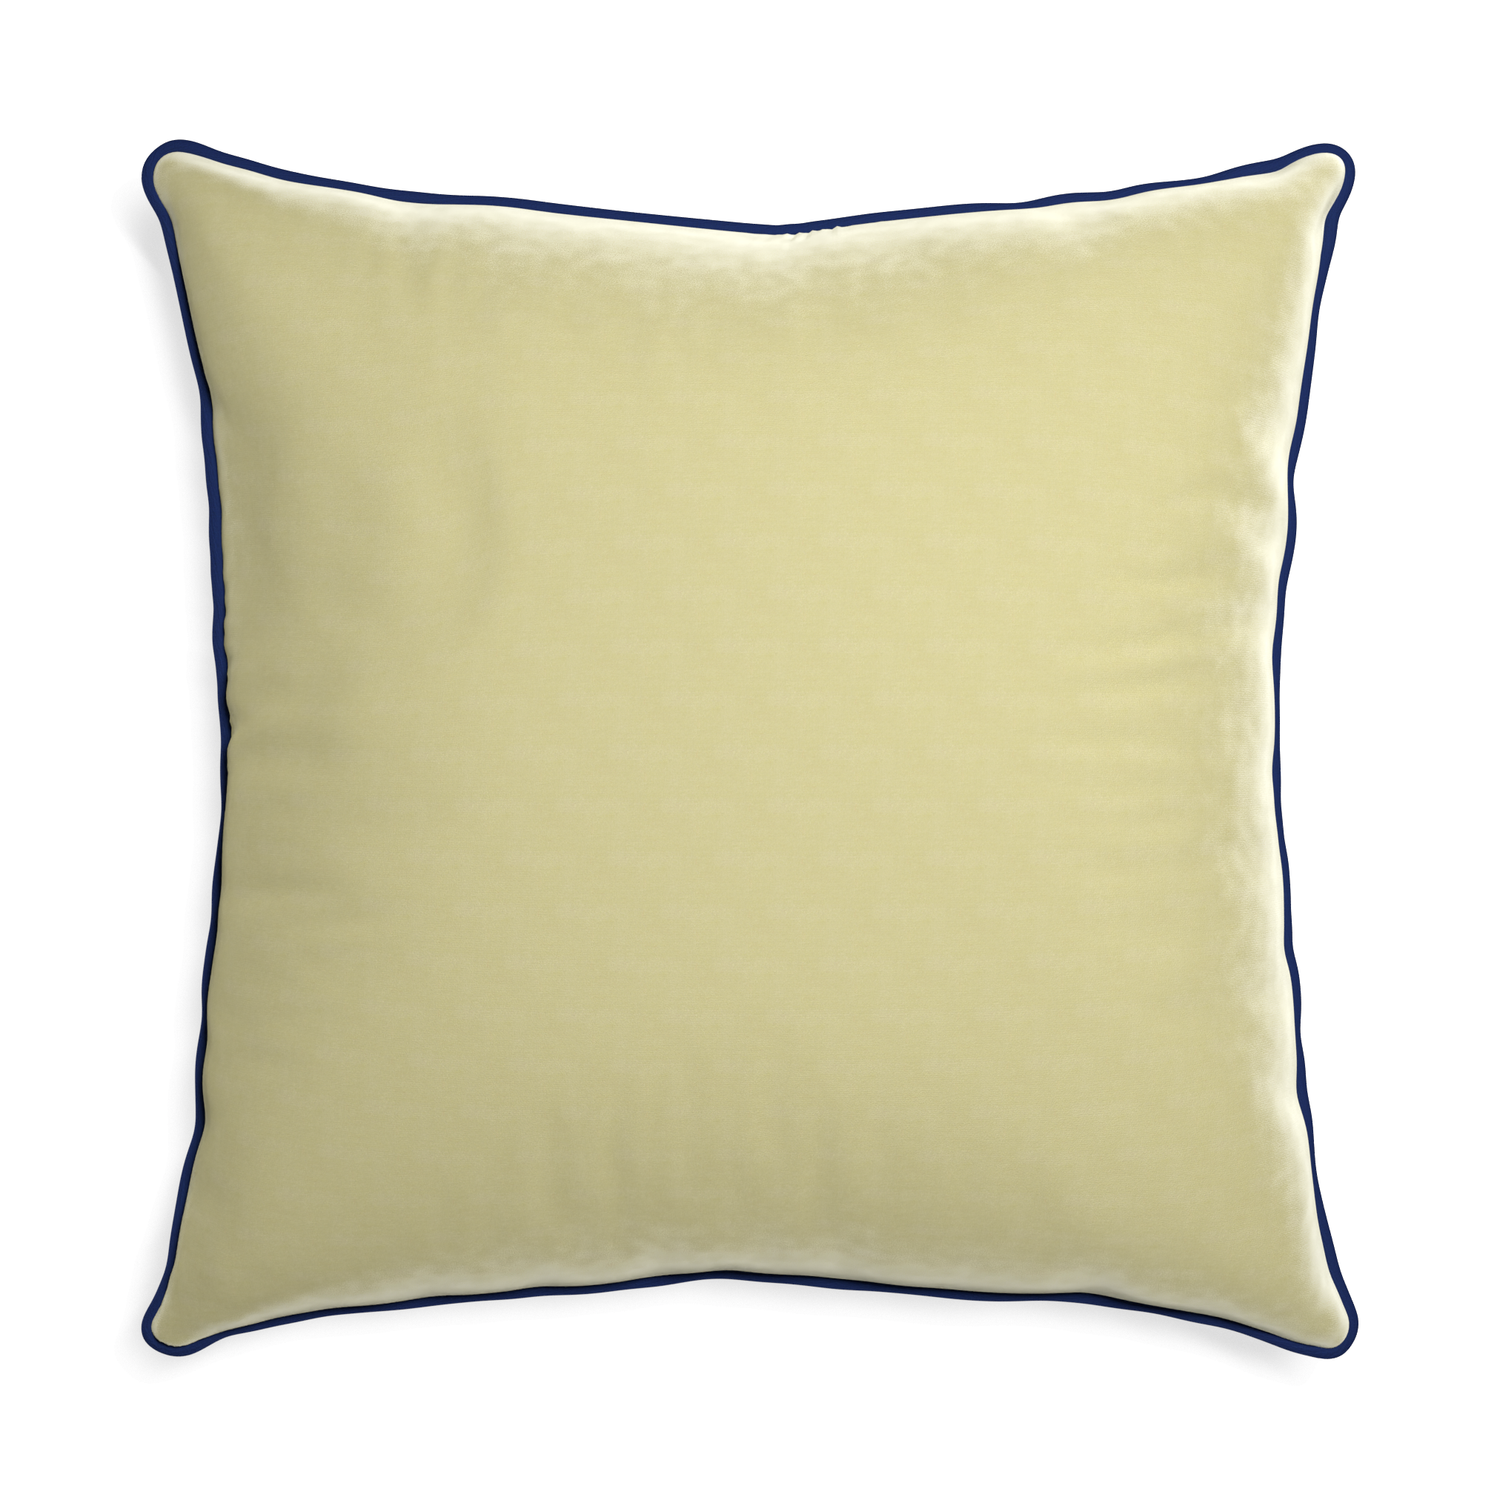 Euro-sham pear velvet custom pillow with midnight piping on white background